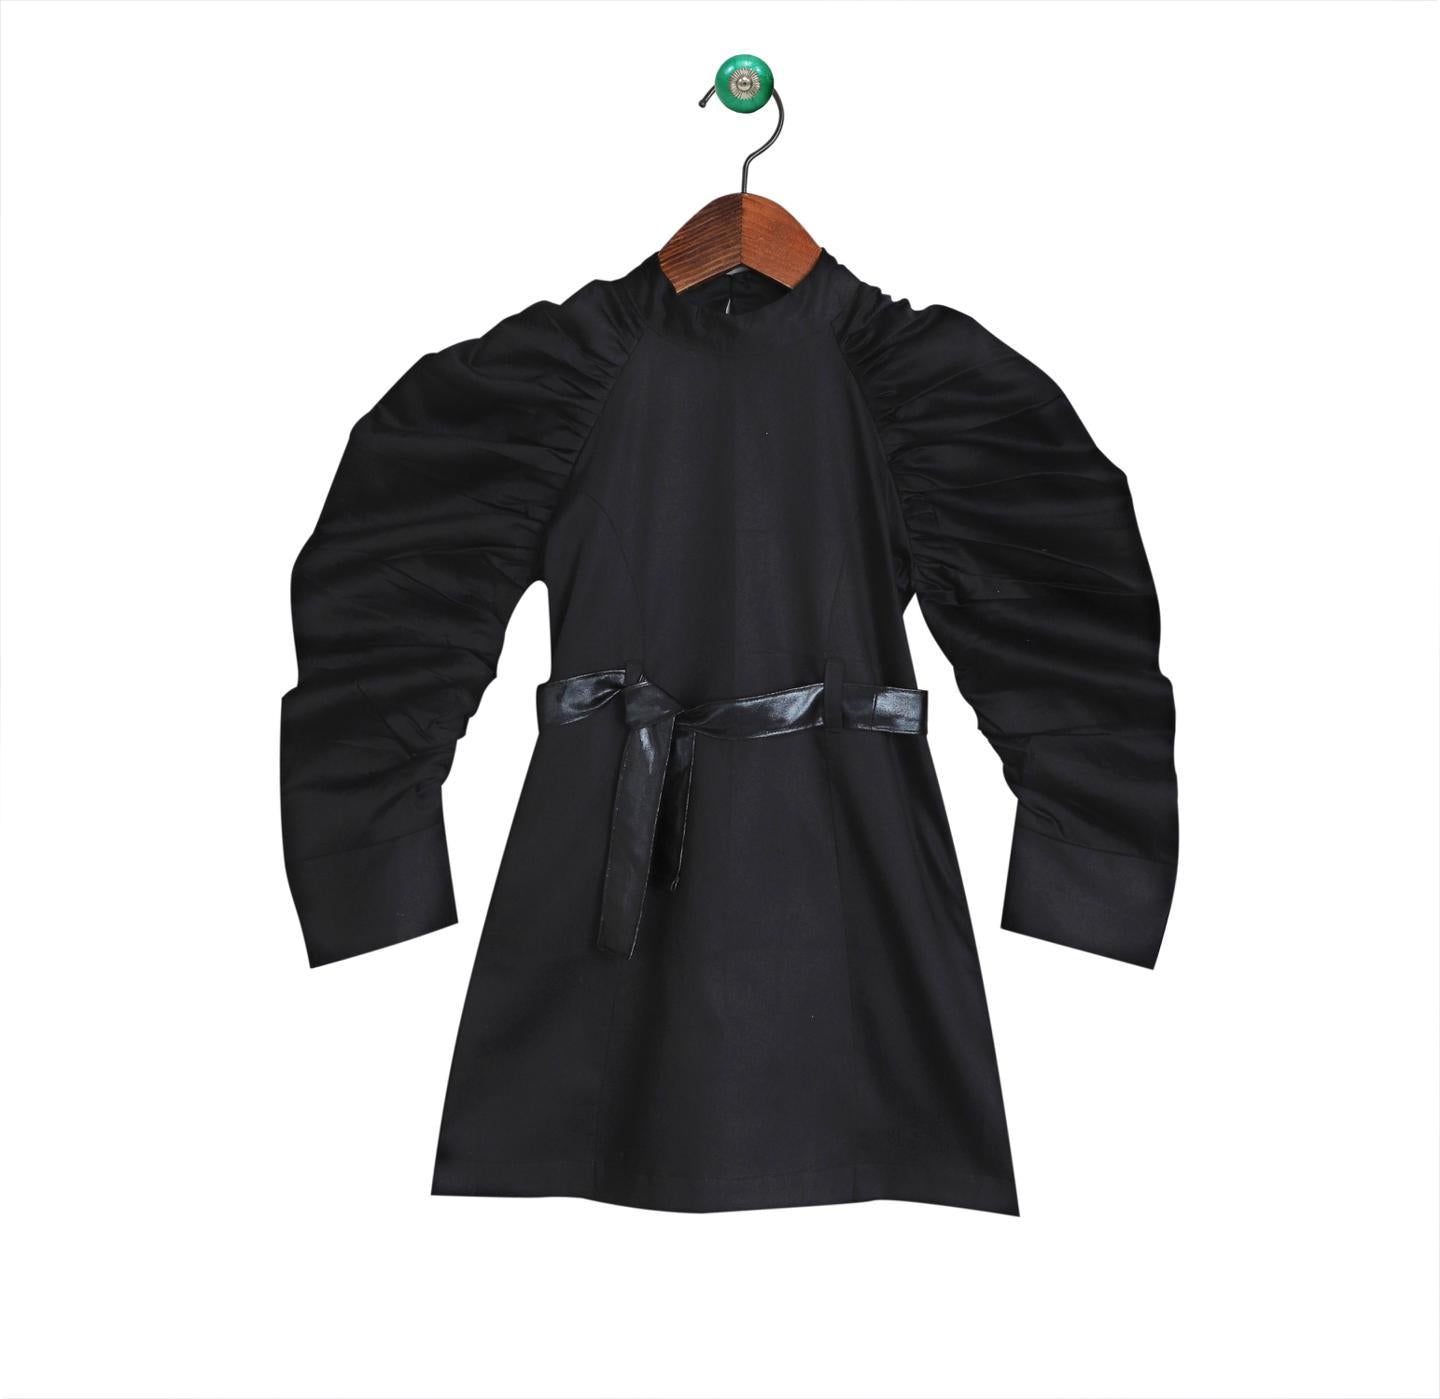 black-puff-sleeves-dress-with-belt-10510016BK, Kids Clothing, Cotton,Satin Girl Dress